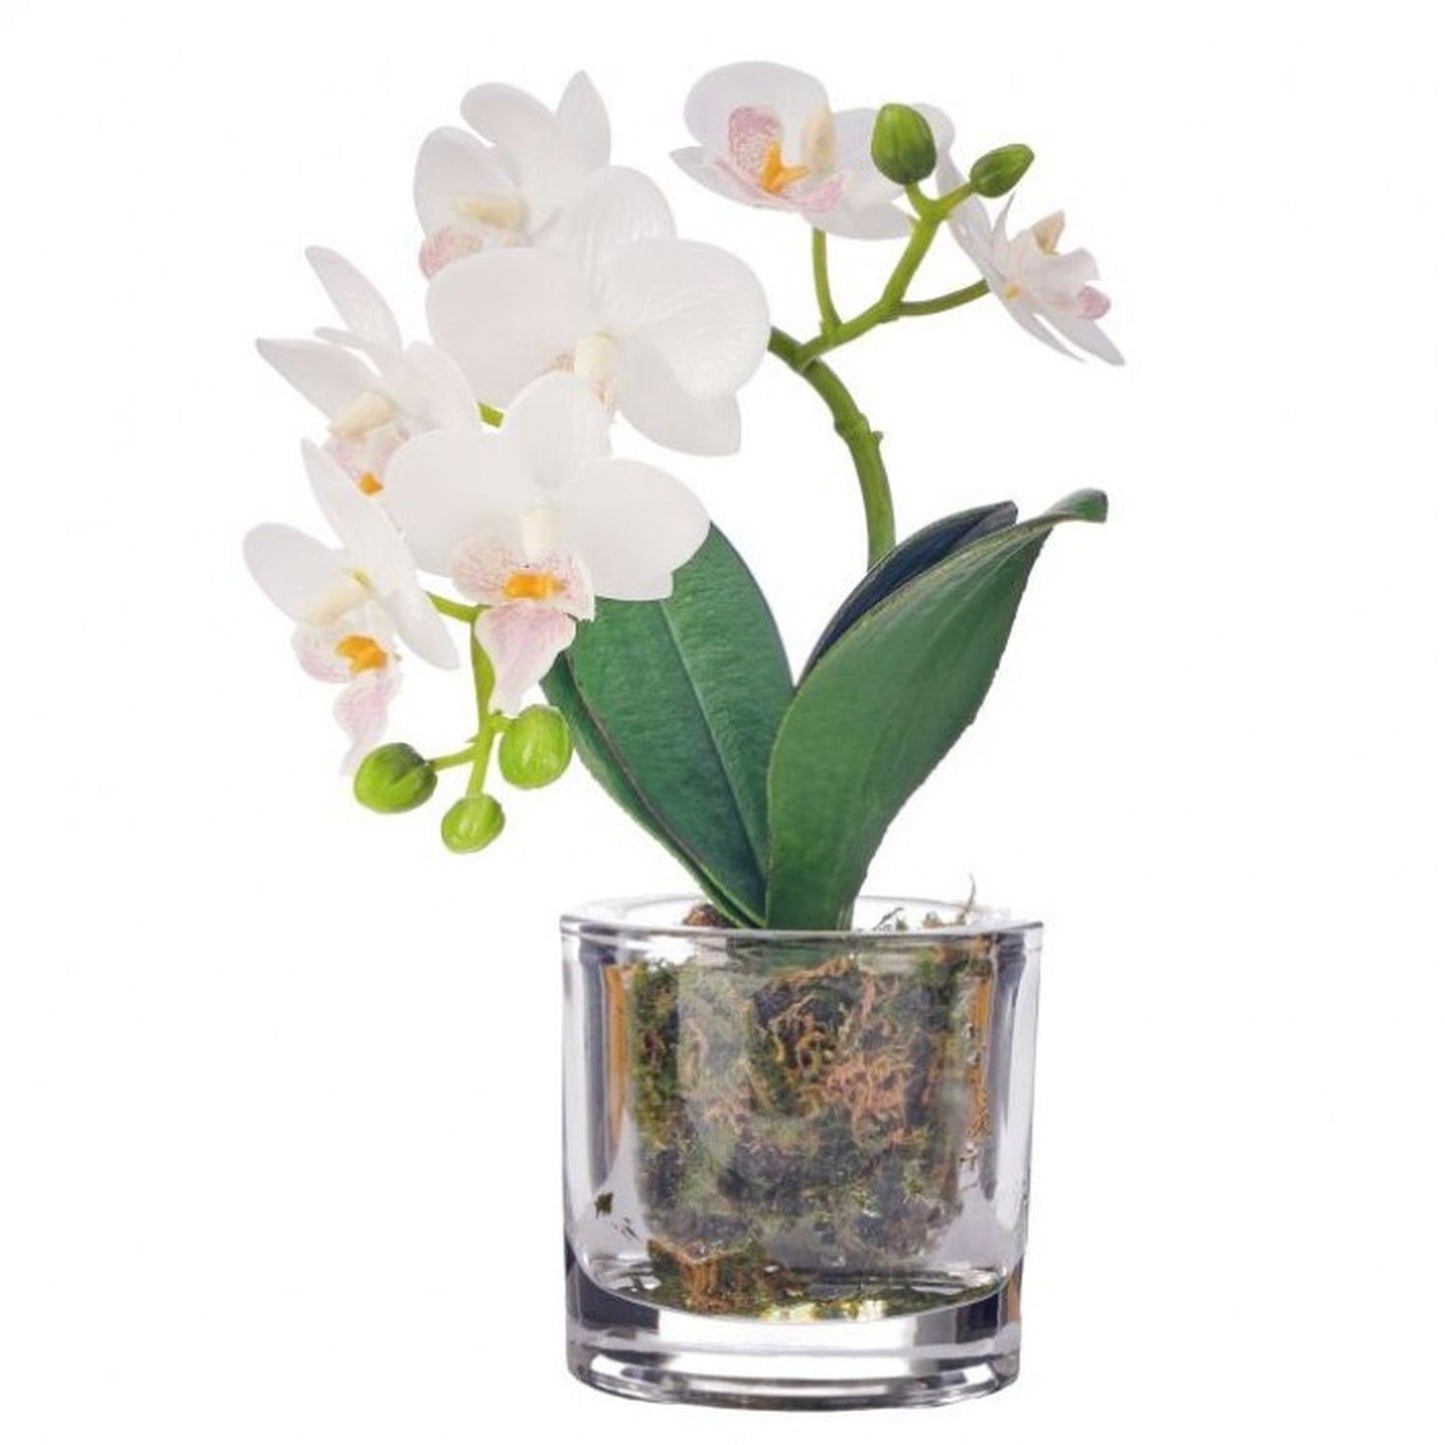 Regency International Phalaenopsis in Illusion 10"